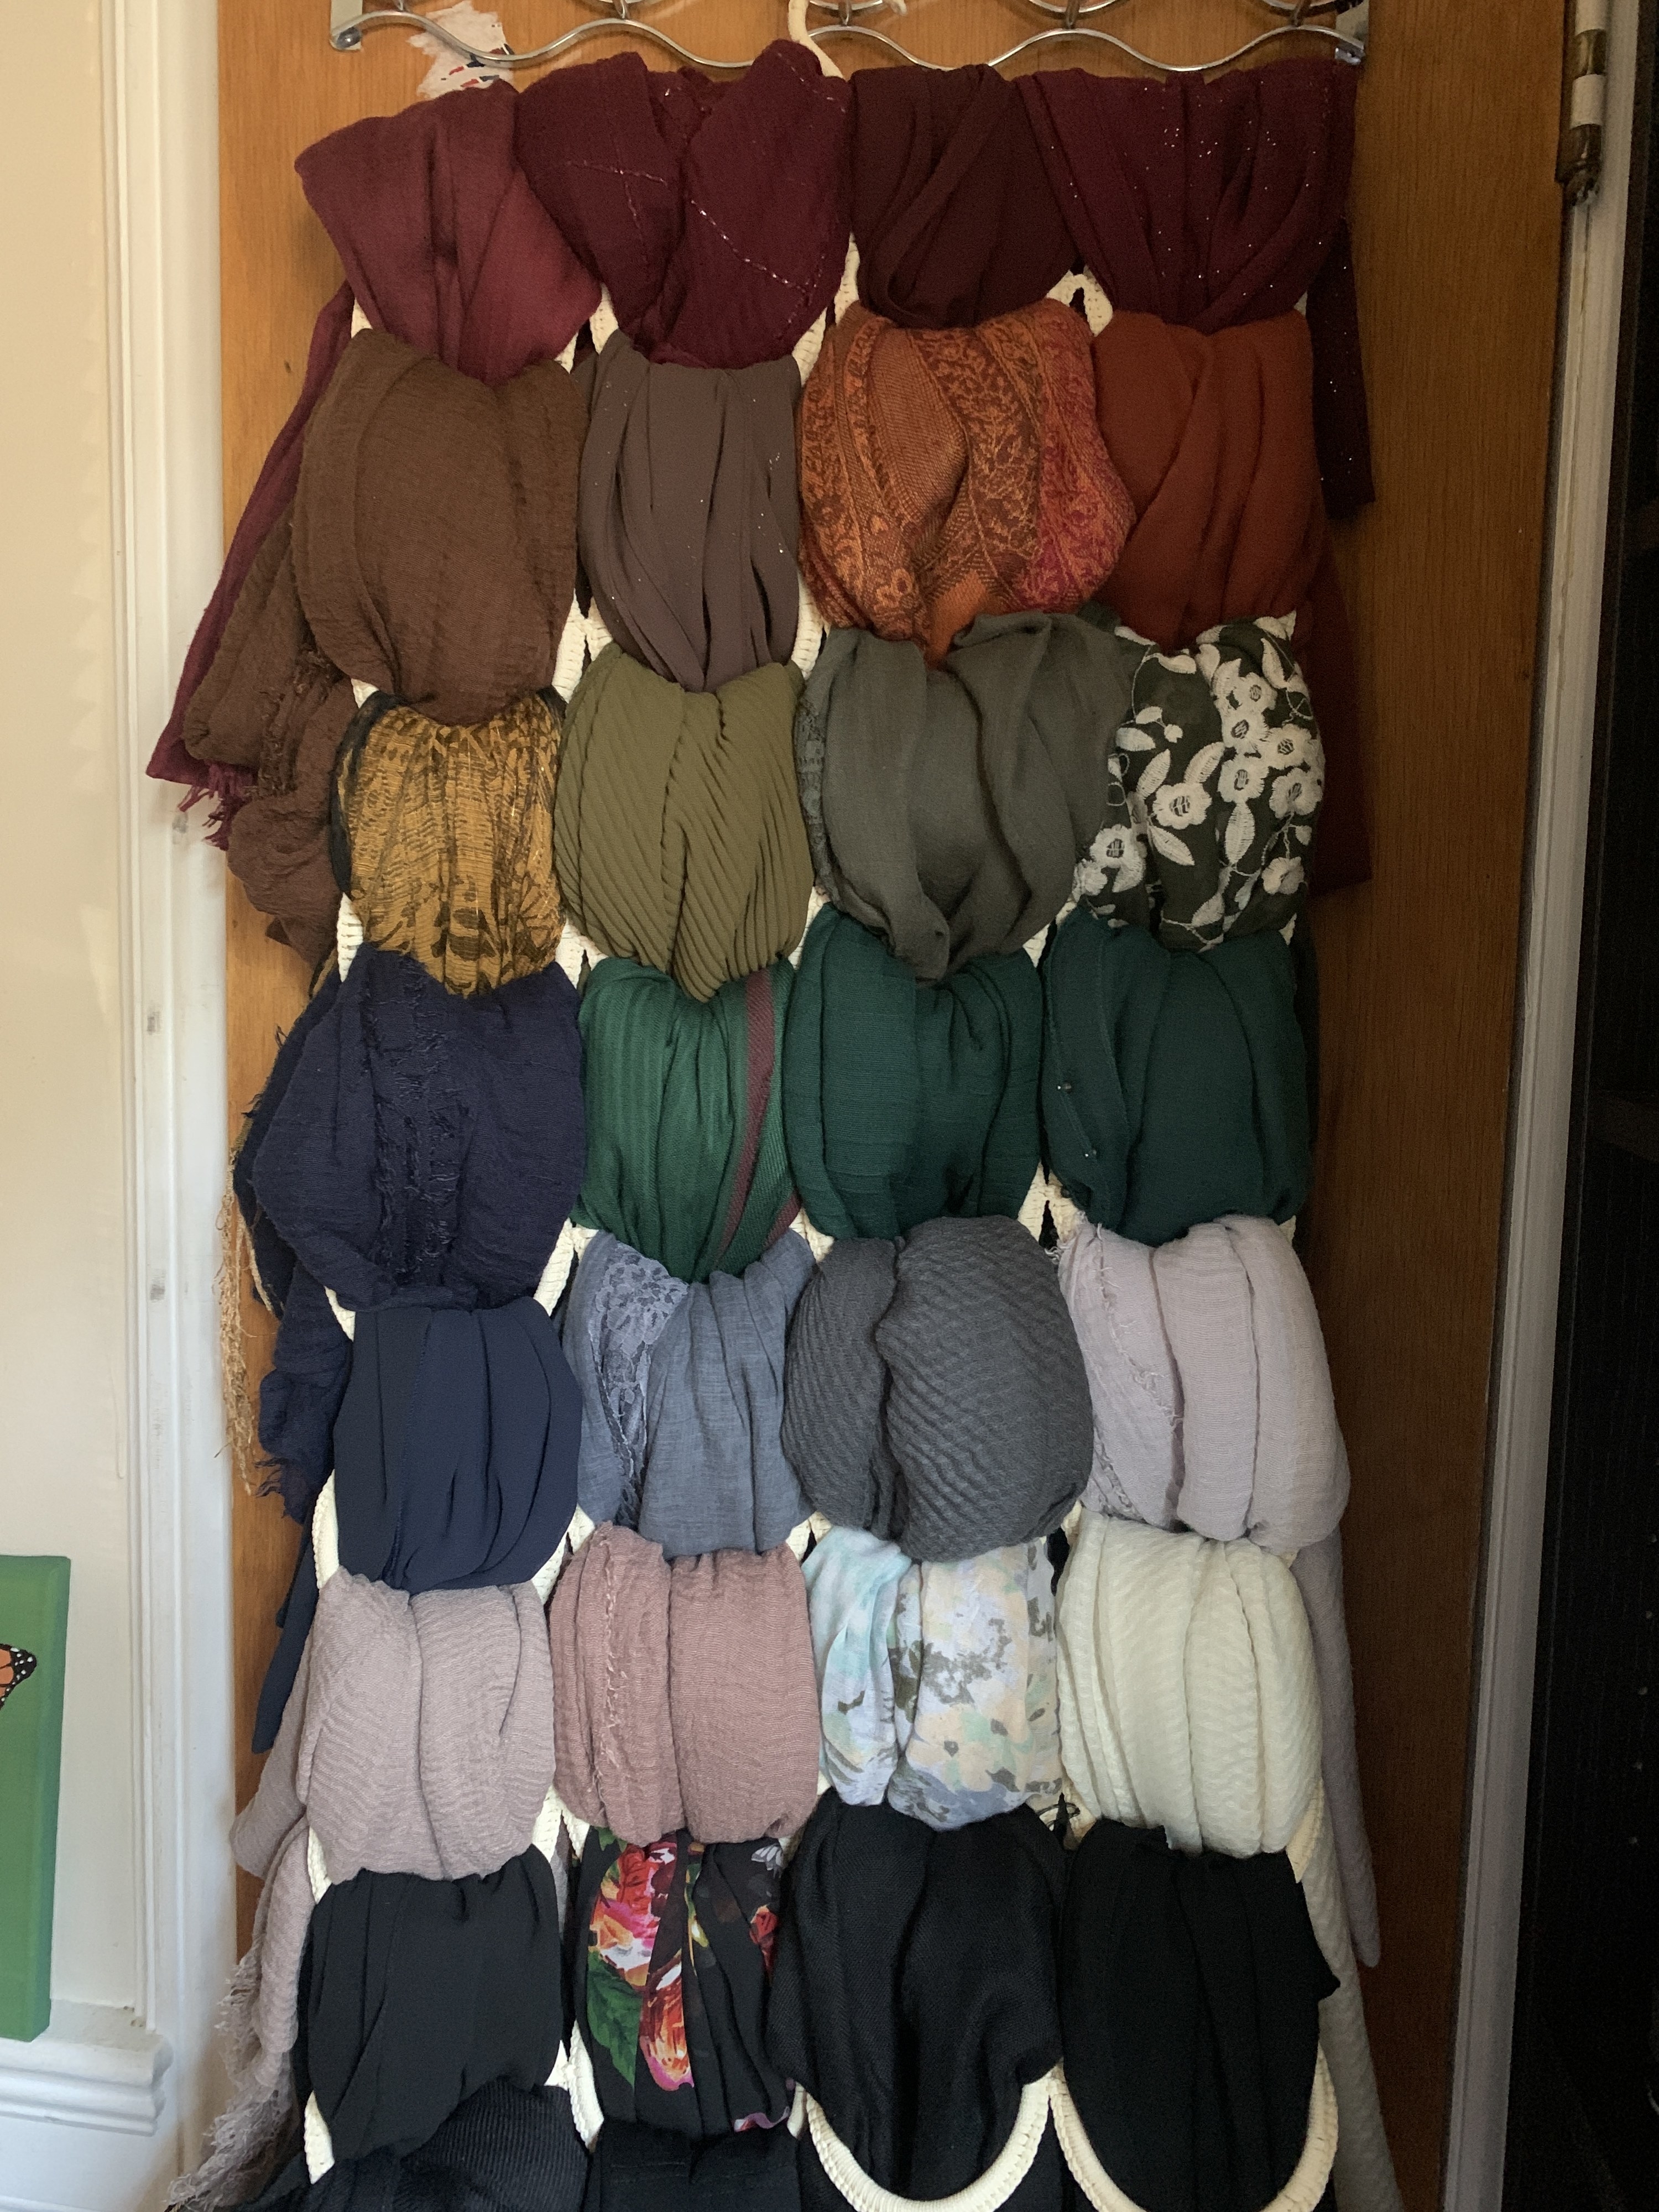 An assortment of headscarves